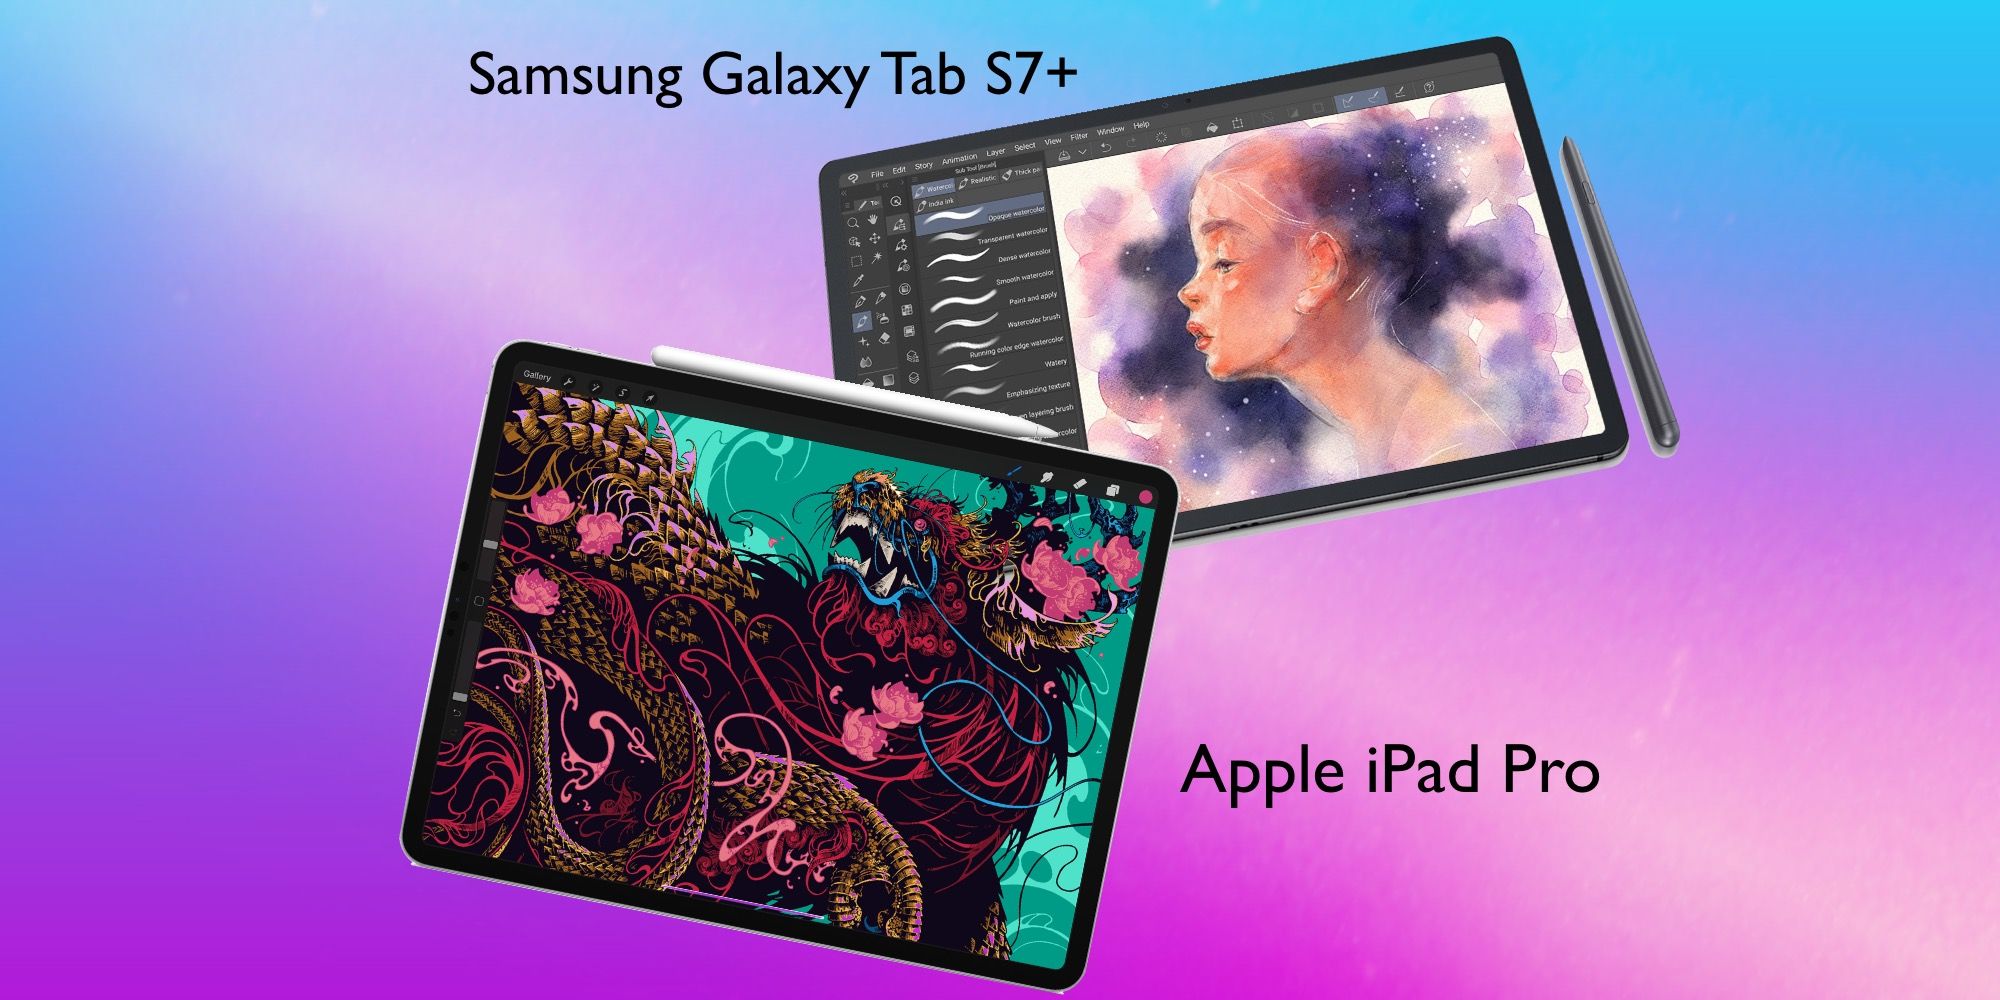 Samsung Galaxy Tab S7 & Apple iPad Pro Compared